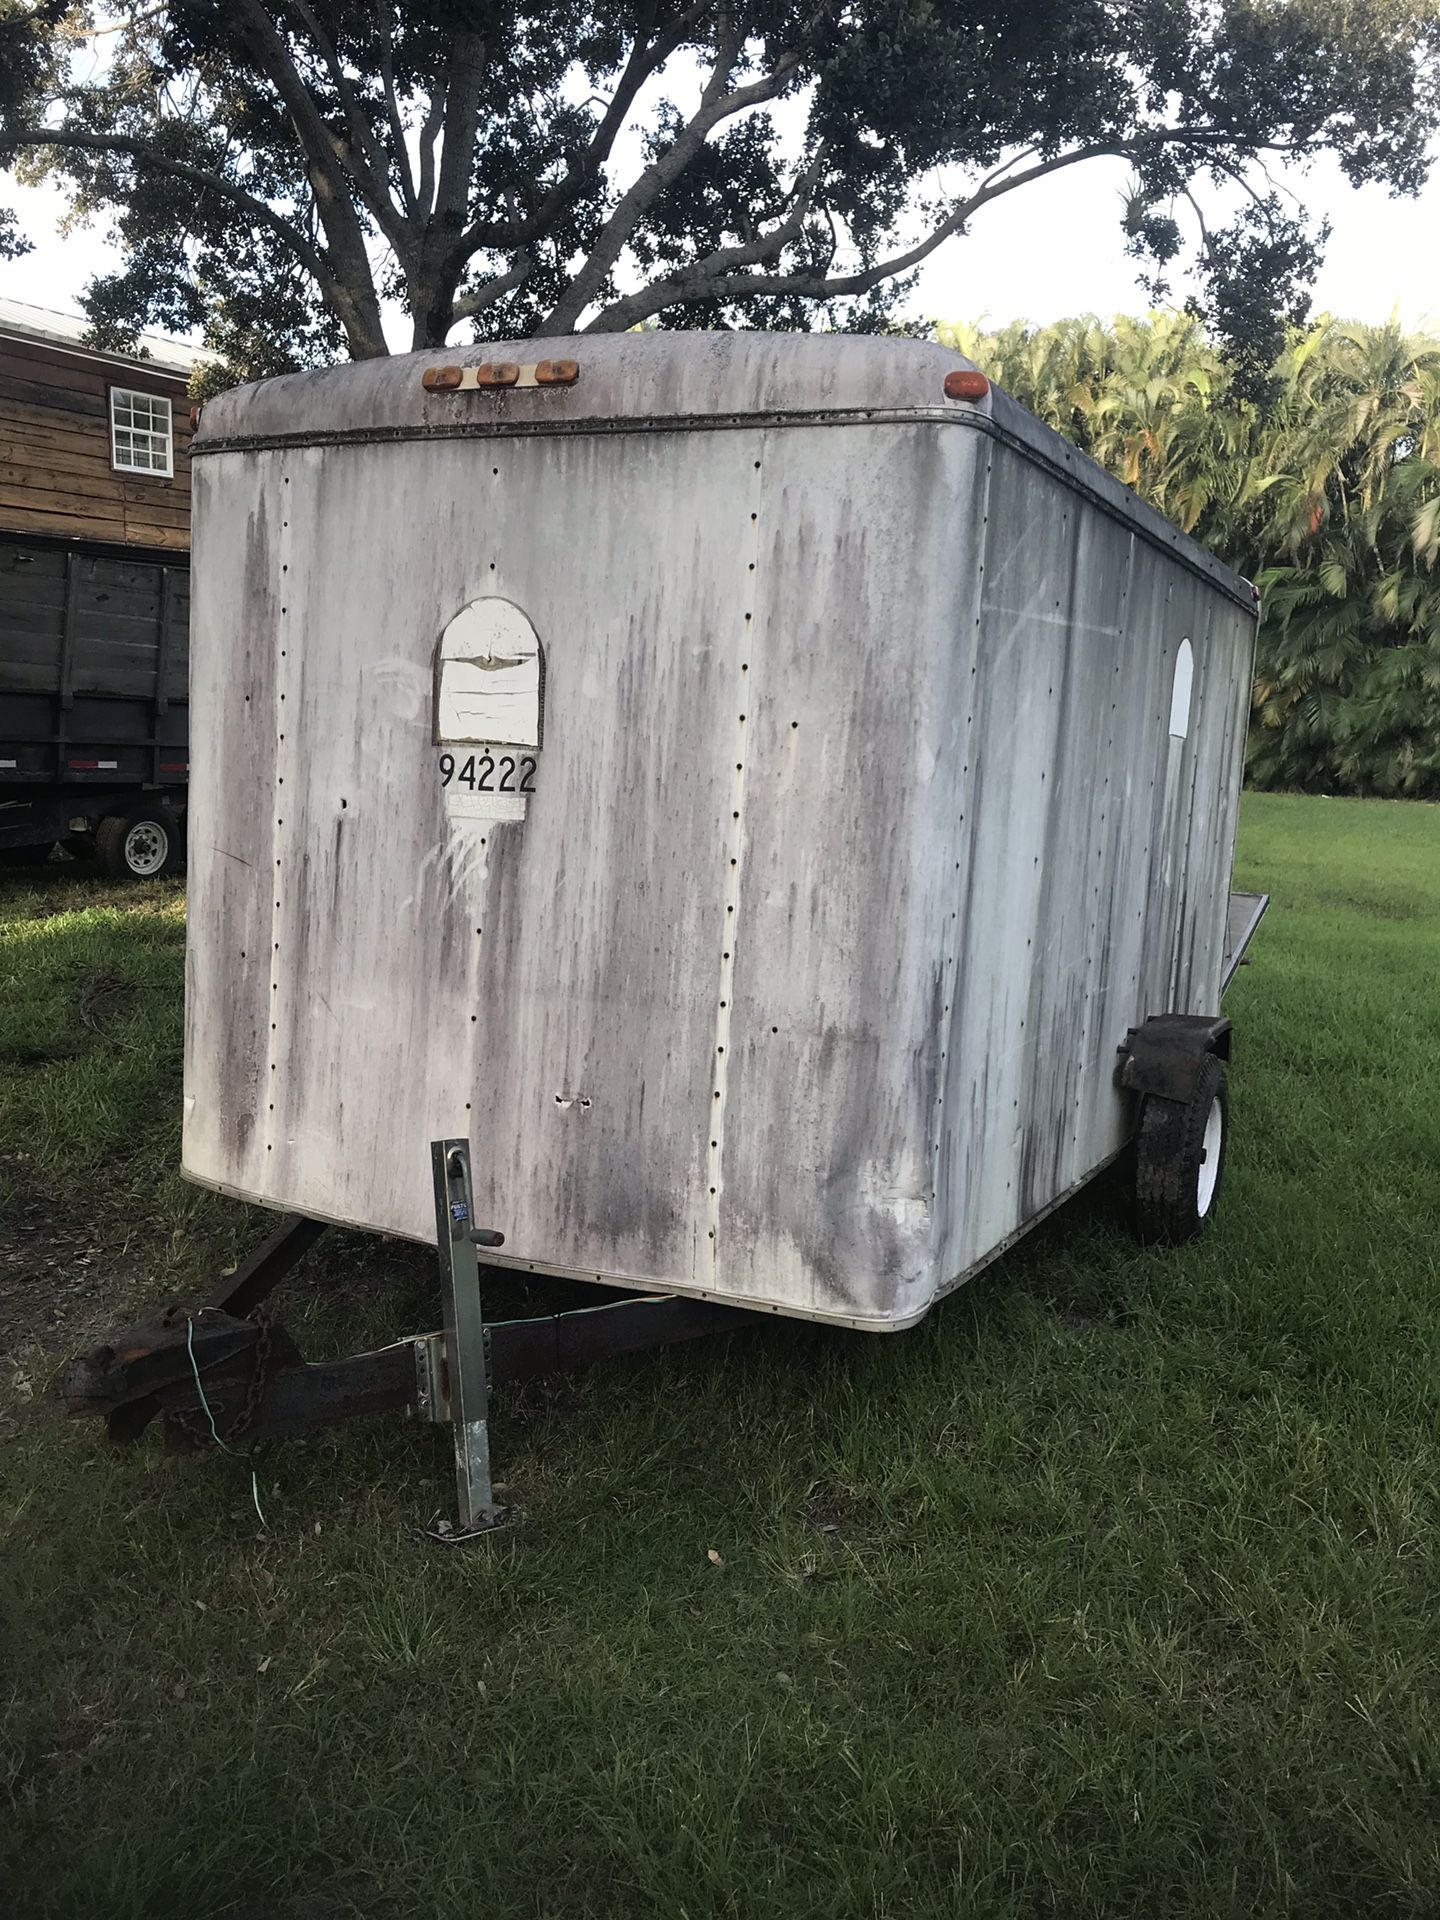 Ugly 12 foot enclosed trailer with rear drop down ramp door